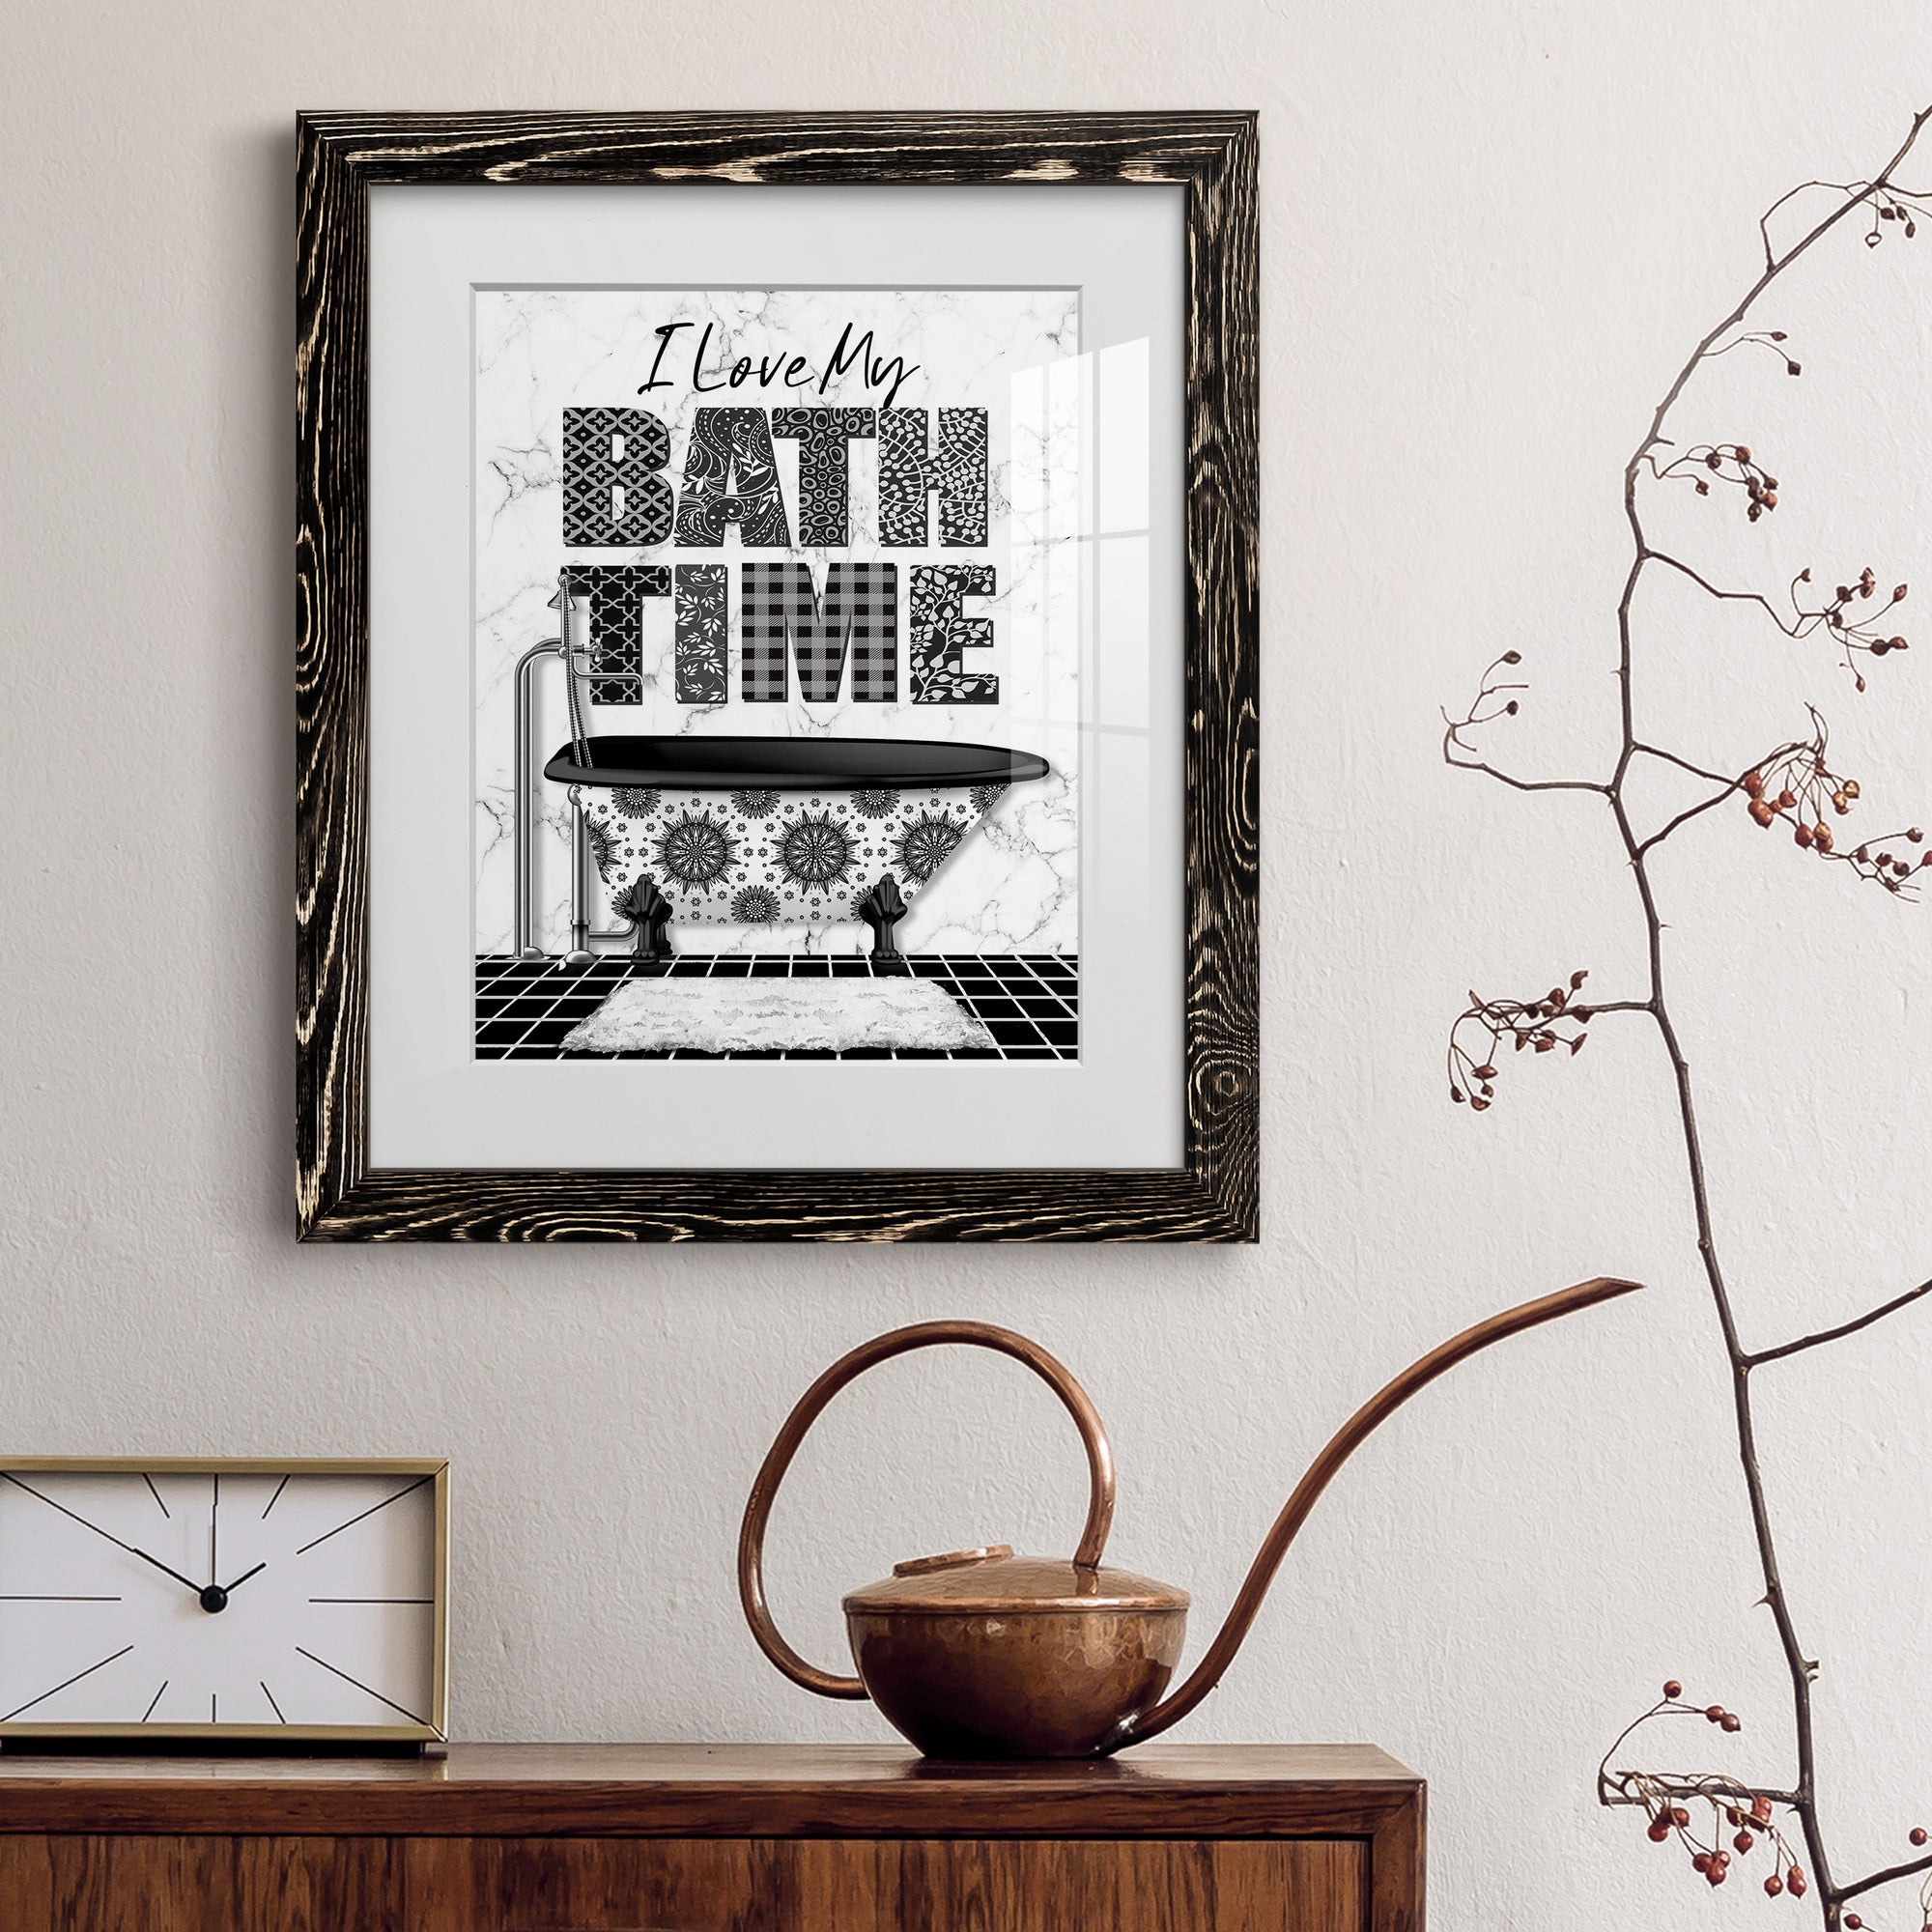 Bath Time - Premium Framed Print - Distressed Barnwood Frame - Ready to Hang